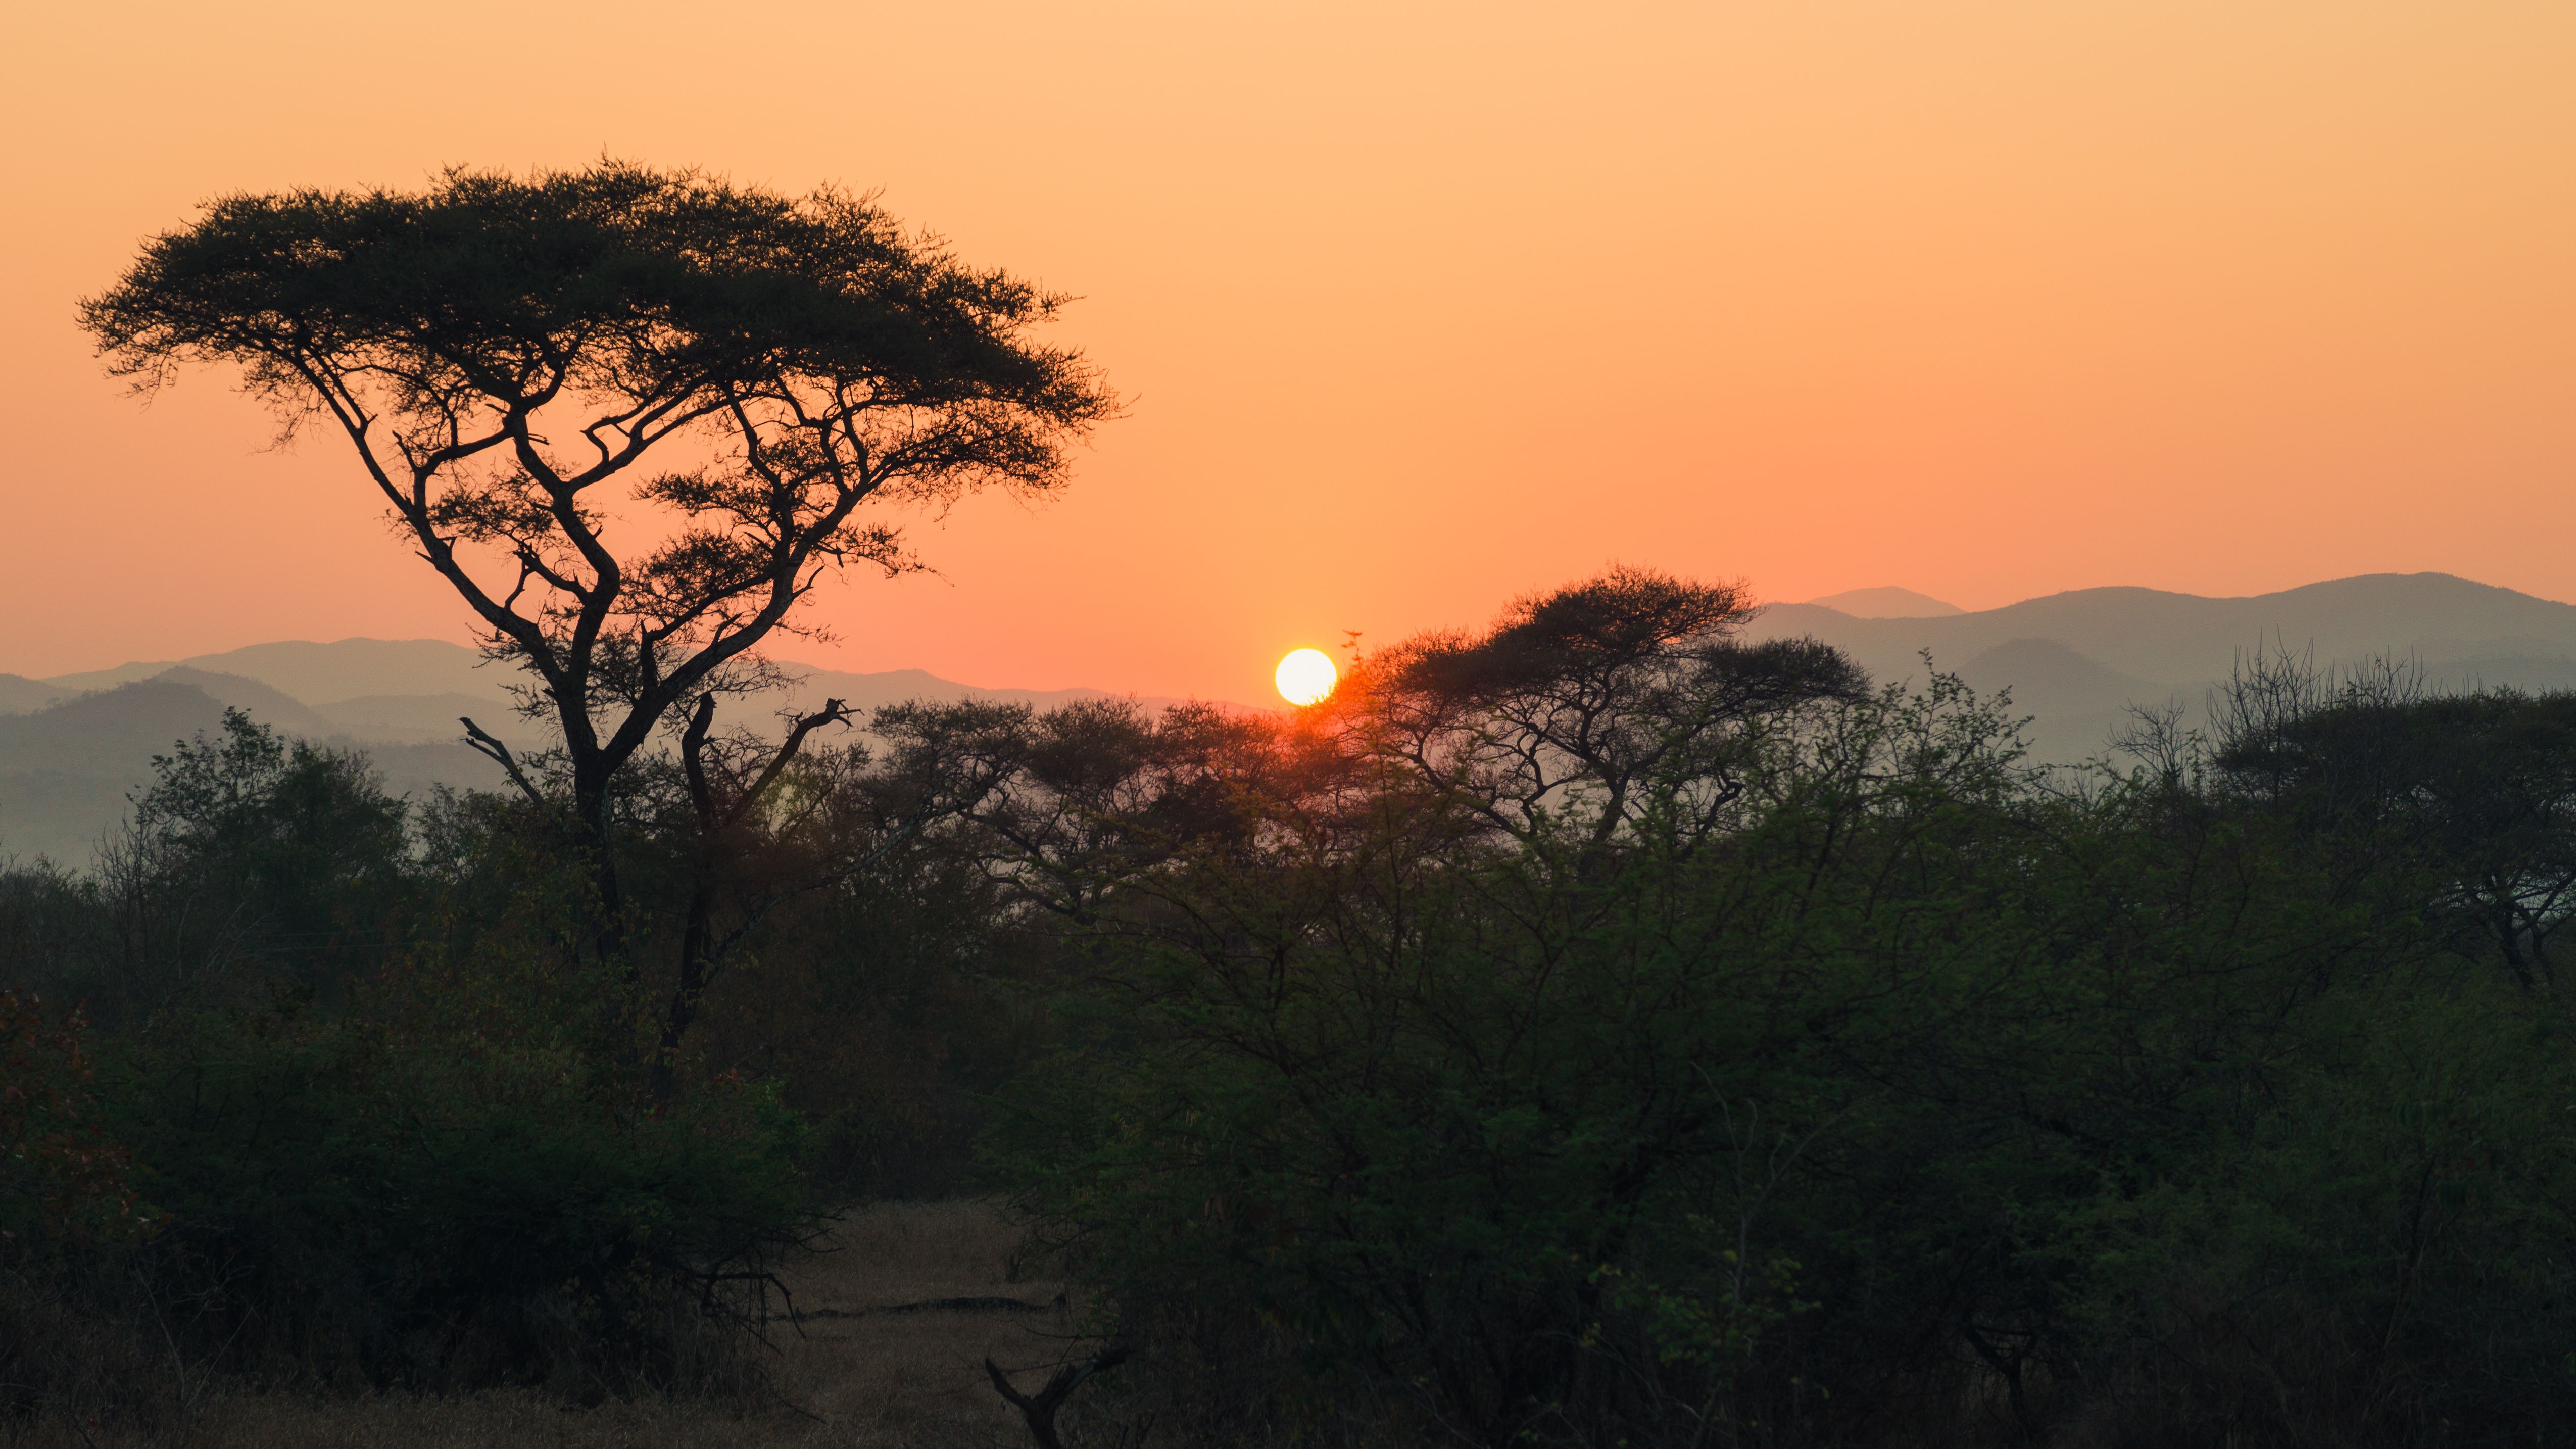 Sunrise over an African landscape.